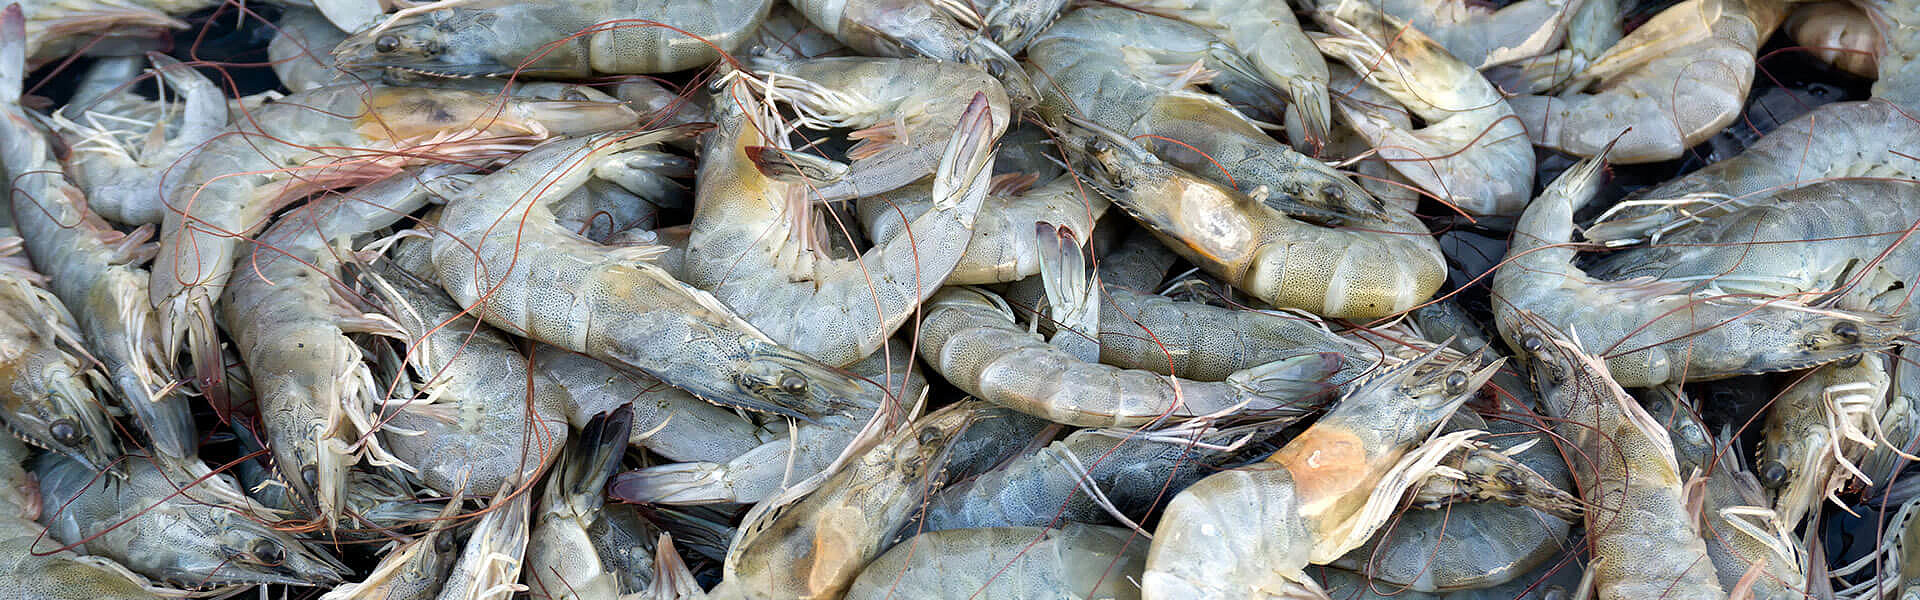 Shrimp diseases 